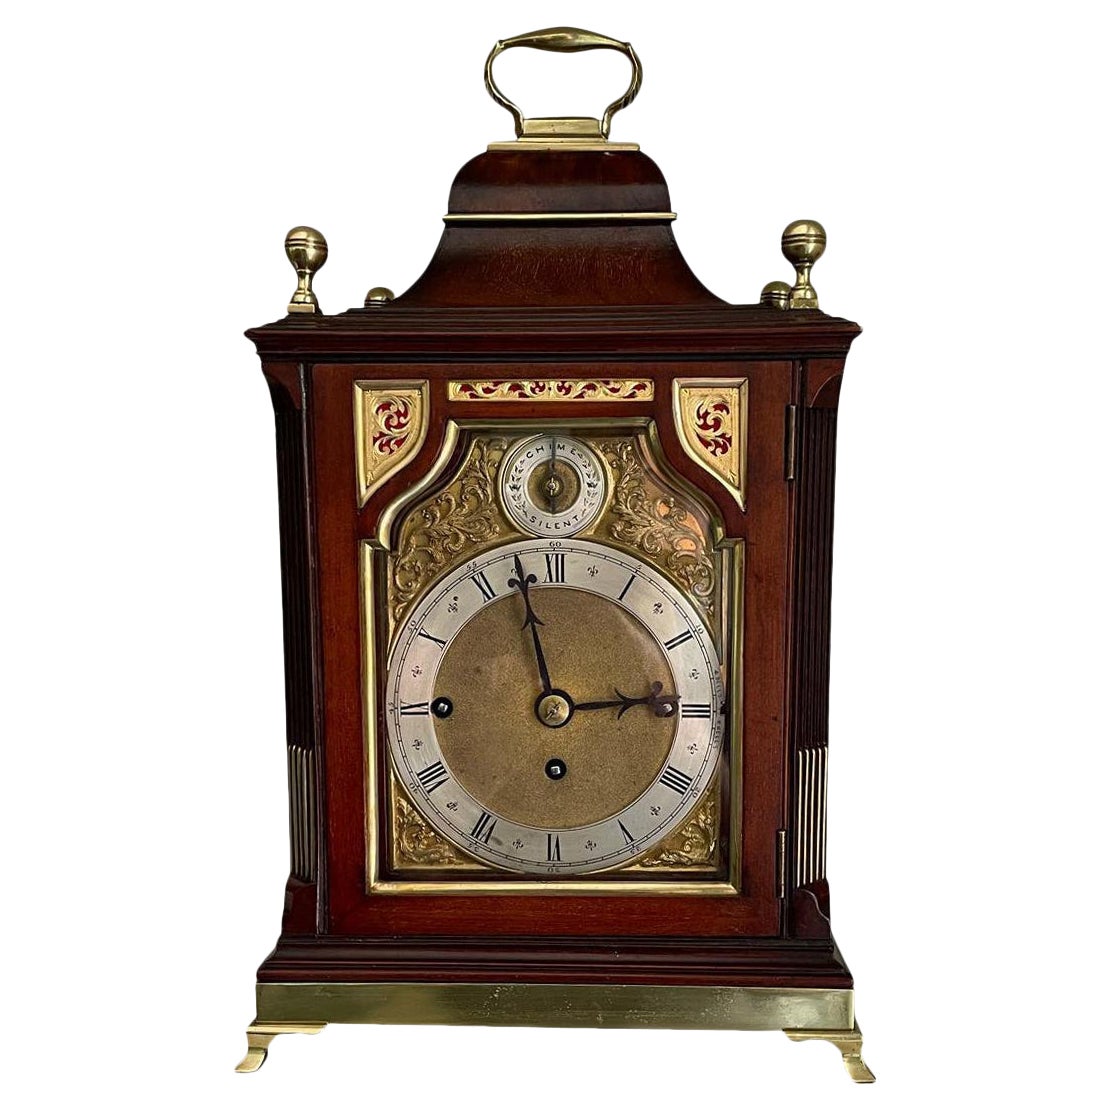 Georgian Style Musical Clock, Chiming on 8 Bells, 19th Century